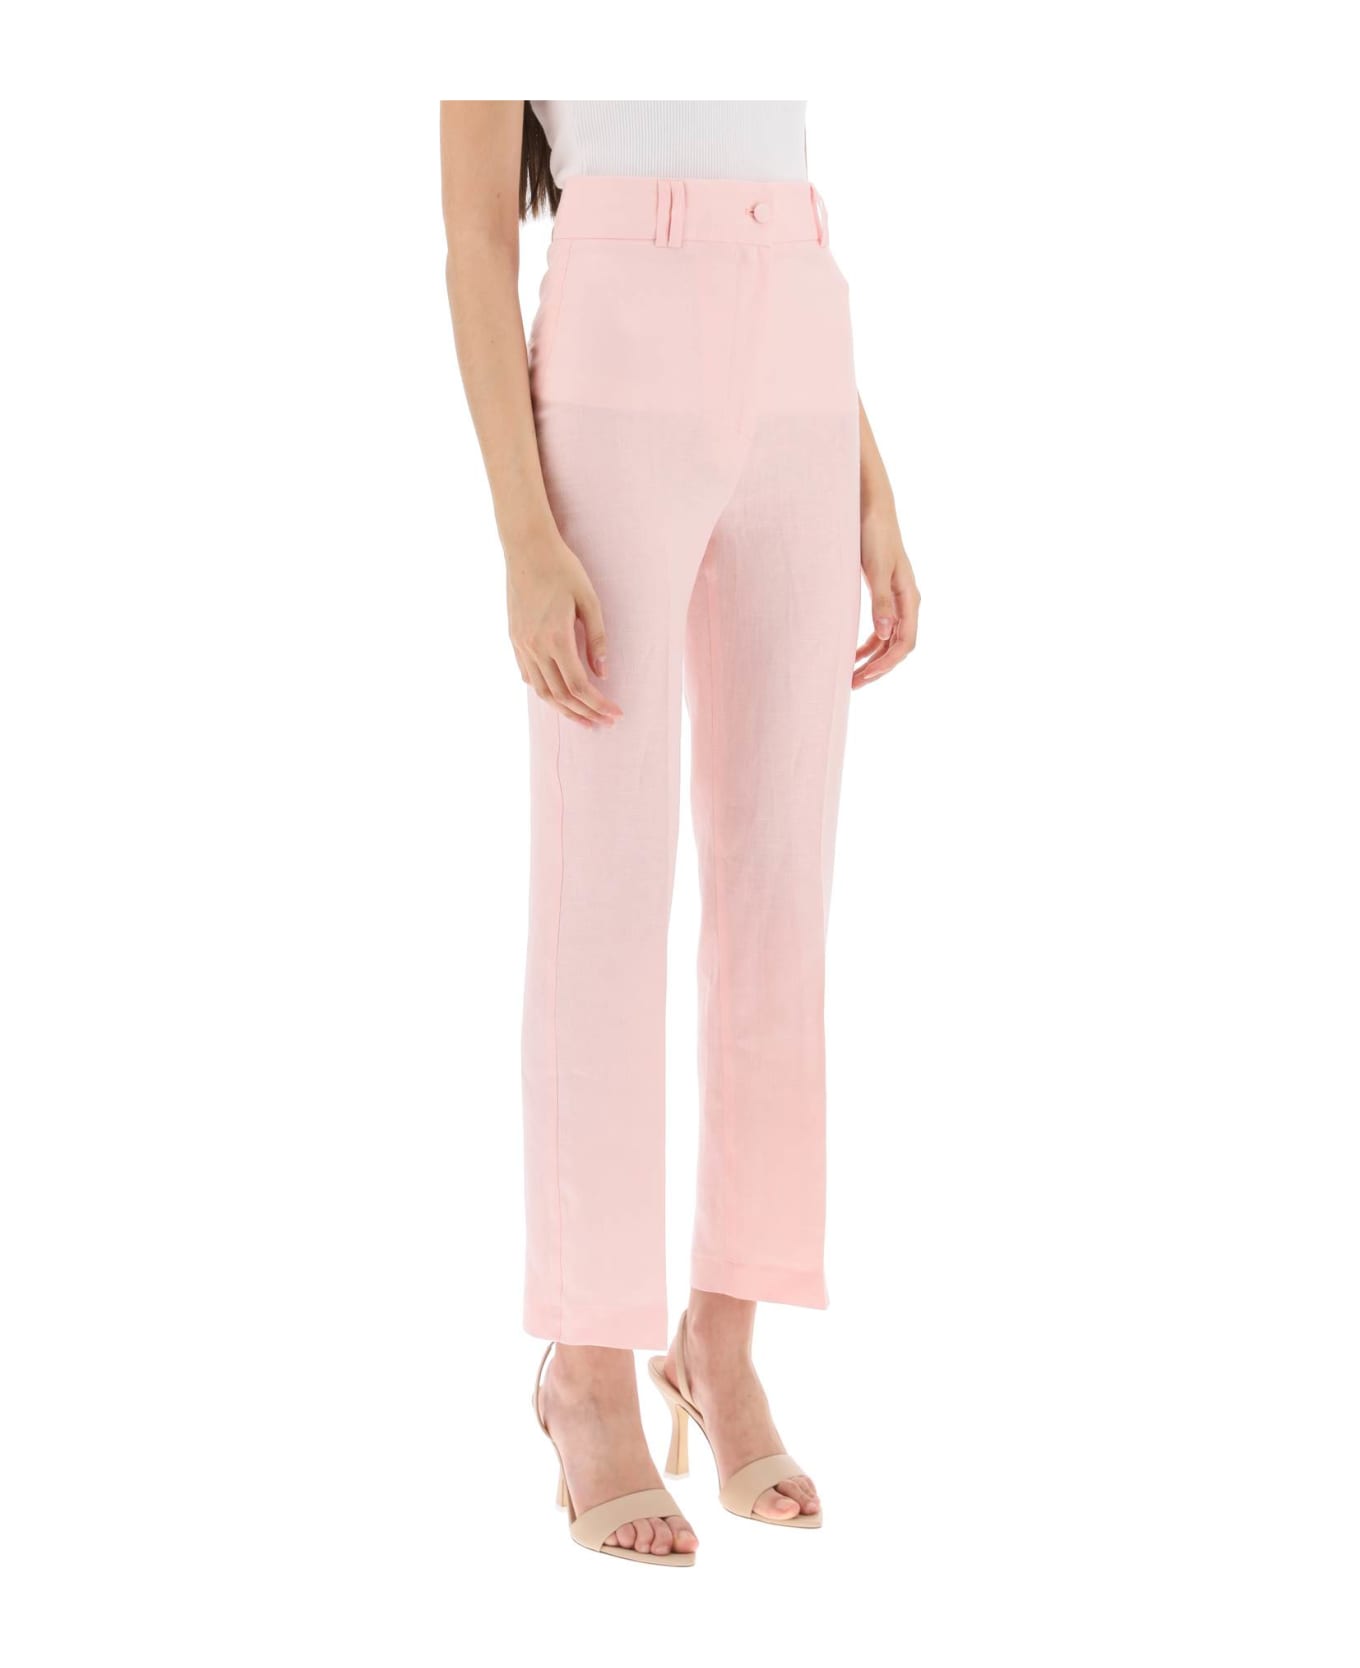 Hebe Studio 'loulou' Linen Trousers - PINK CALYPSO (Pink)